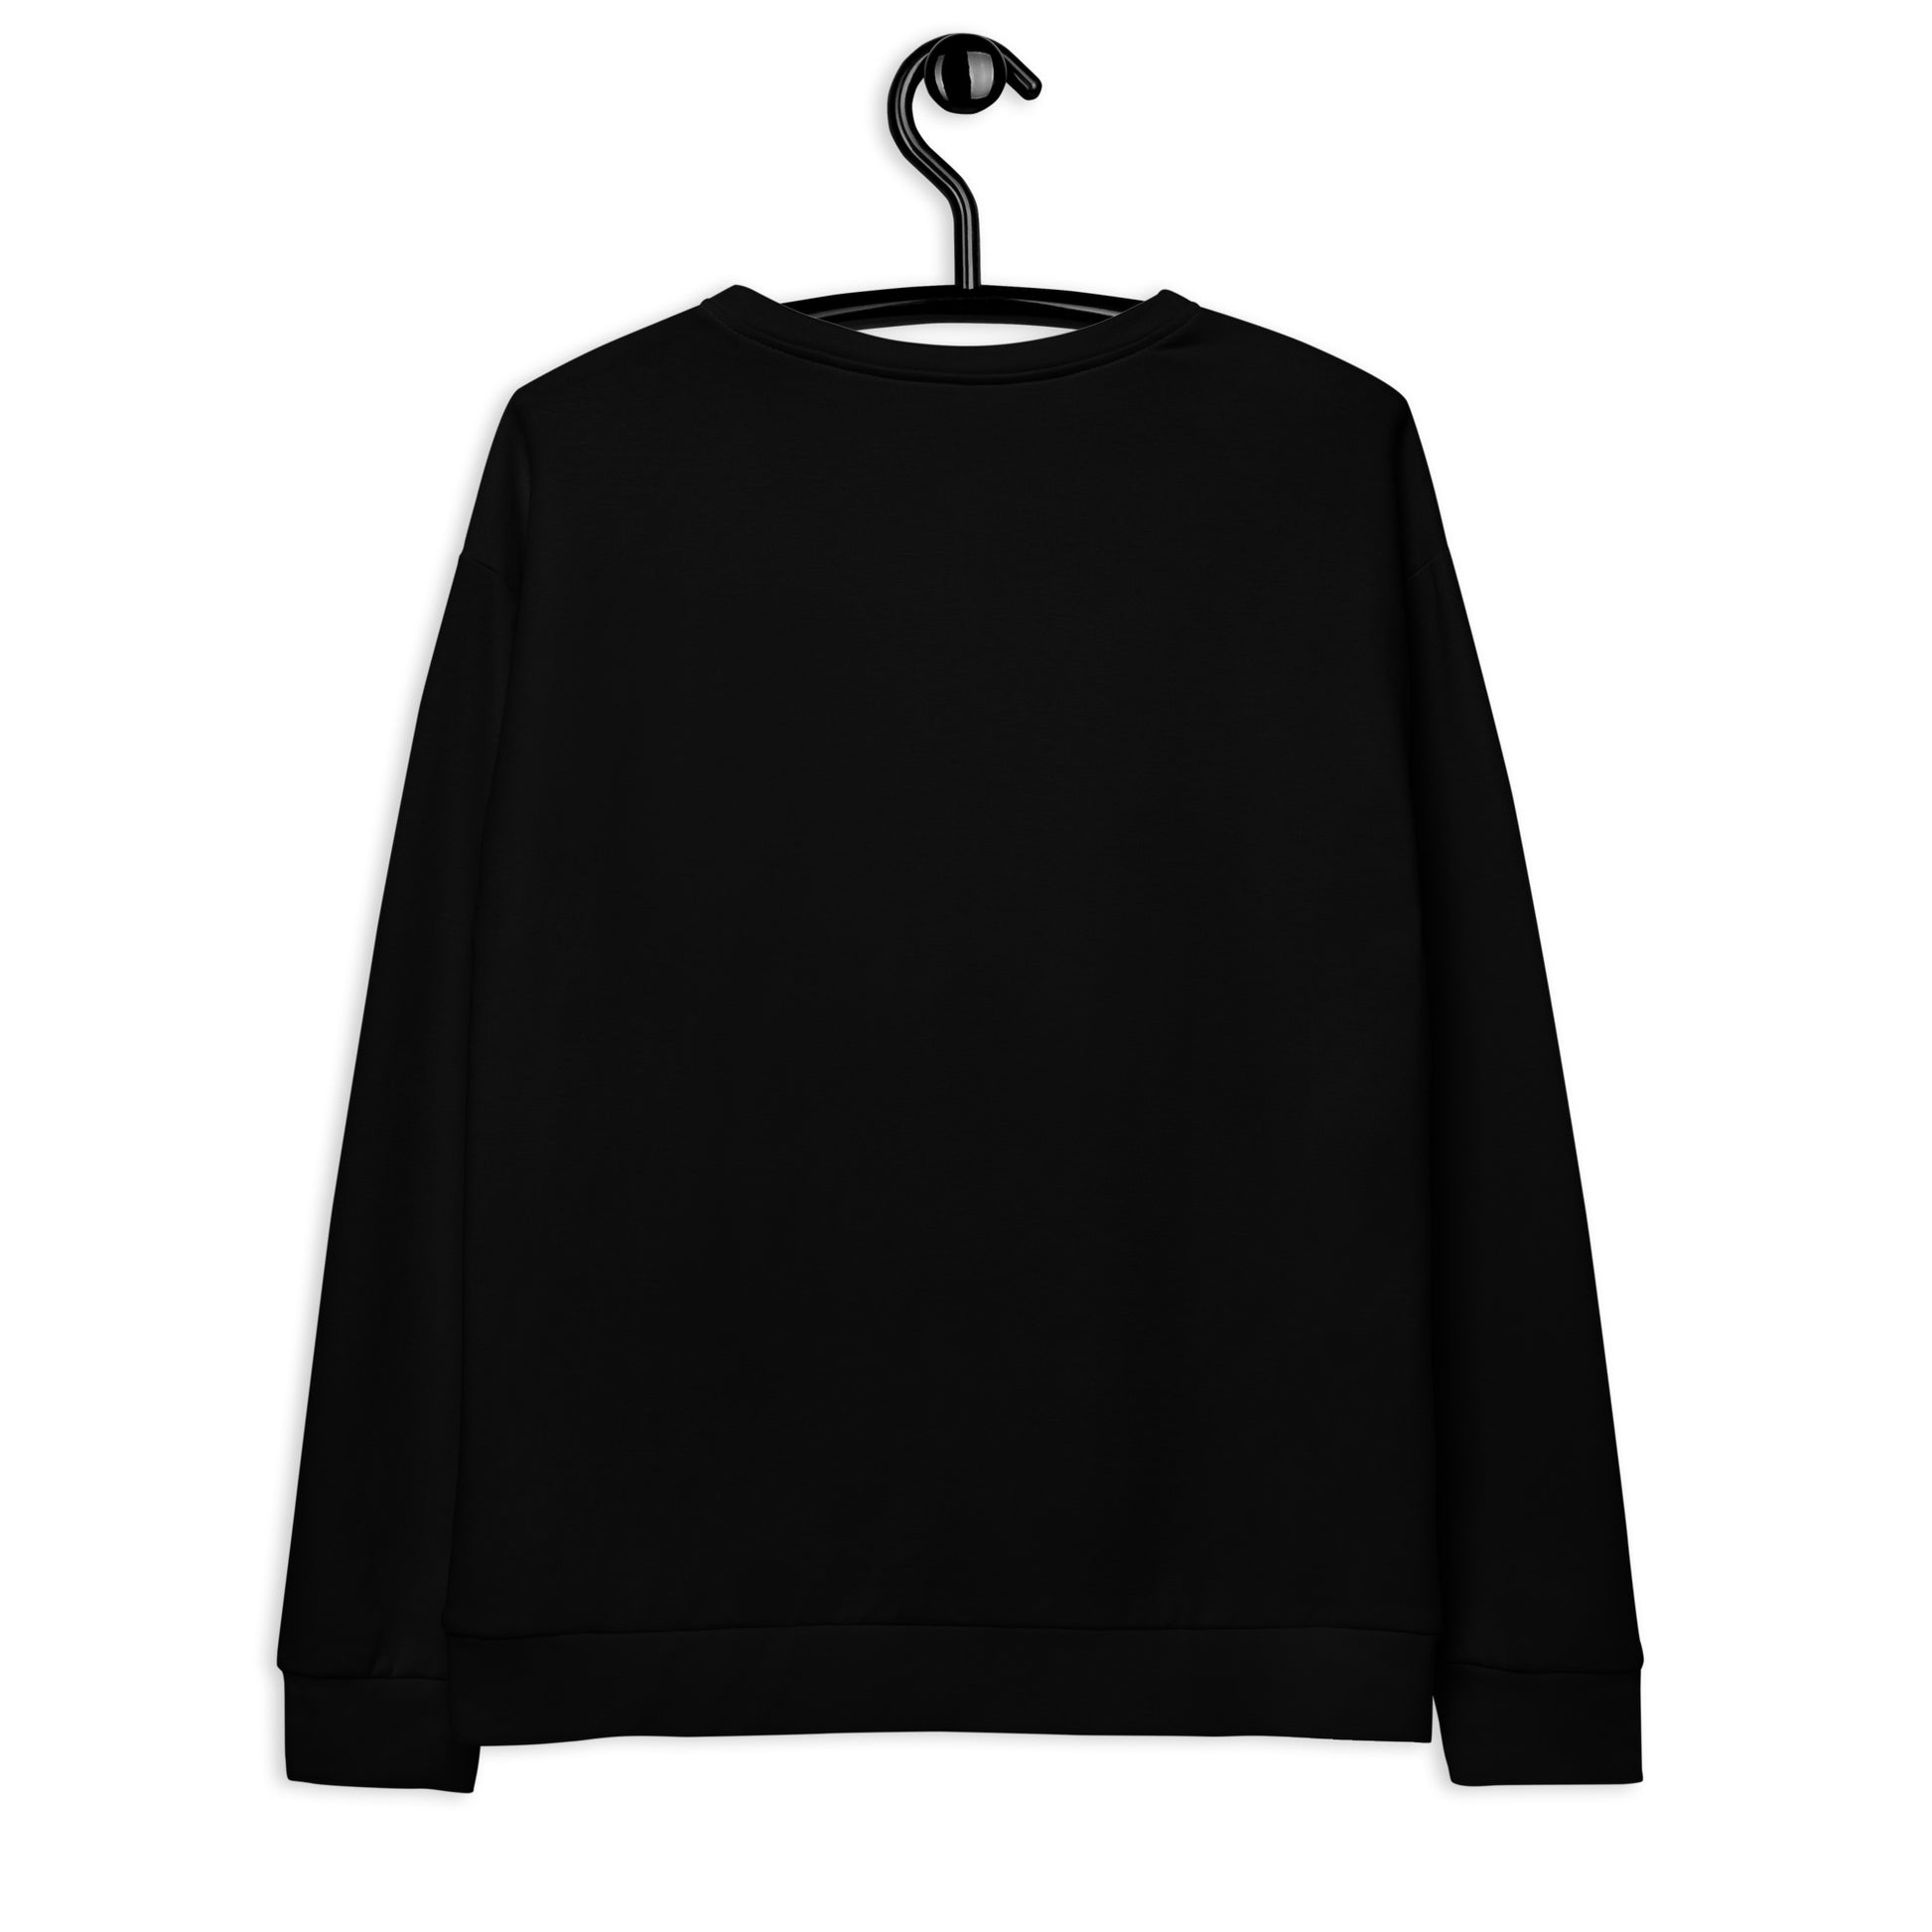 FUNKYPUP black (just pup) - Unisex Sweatshirt